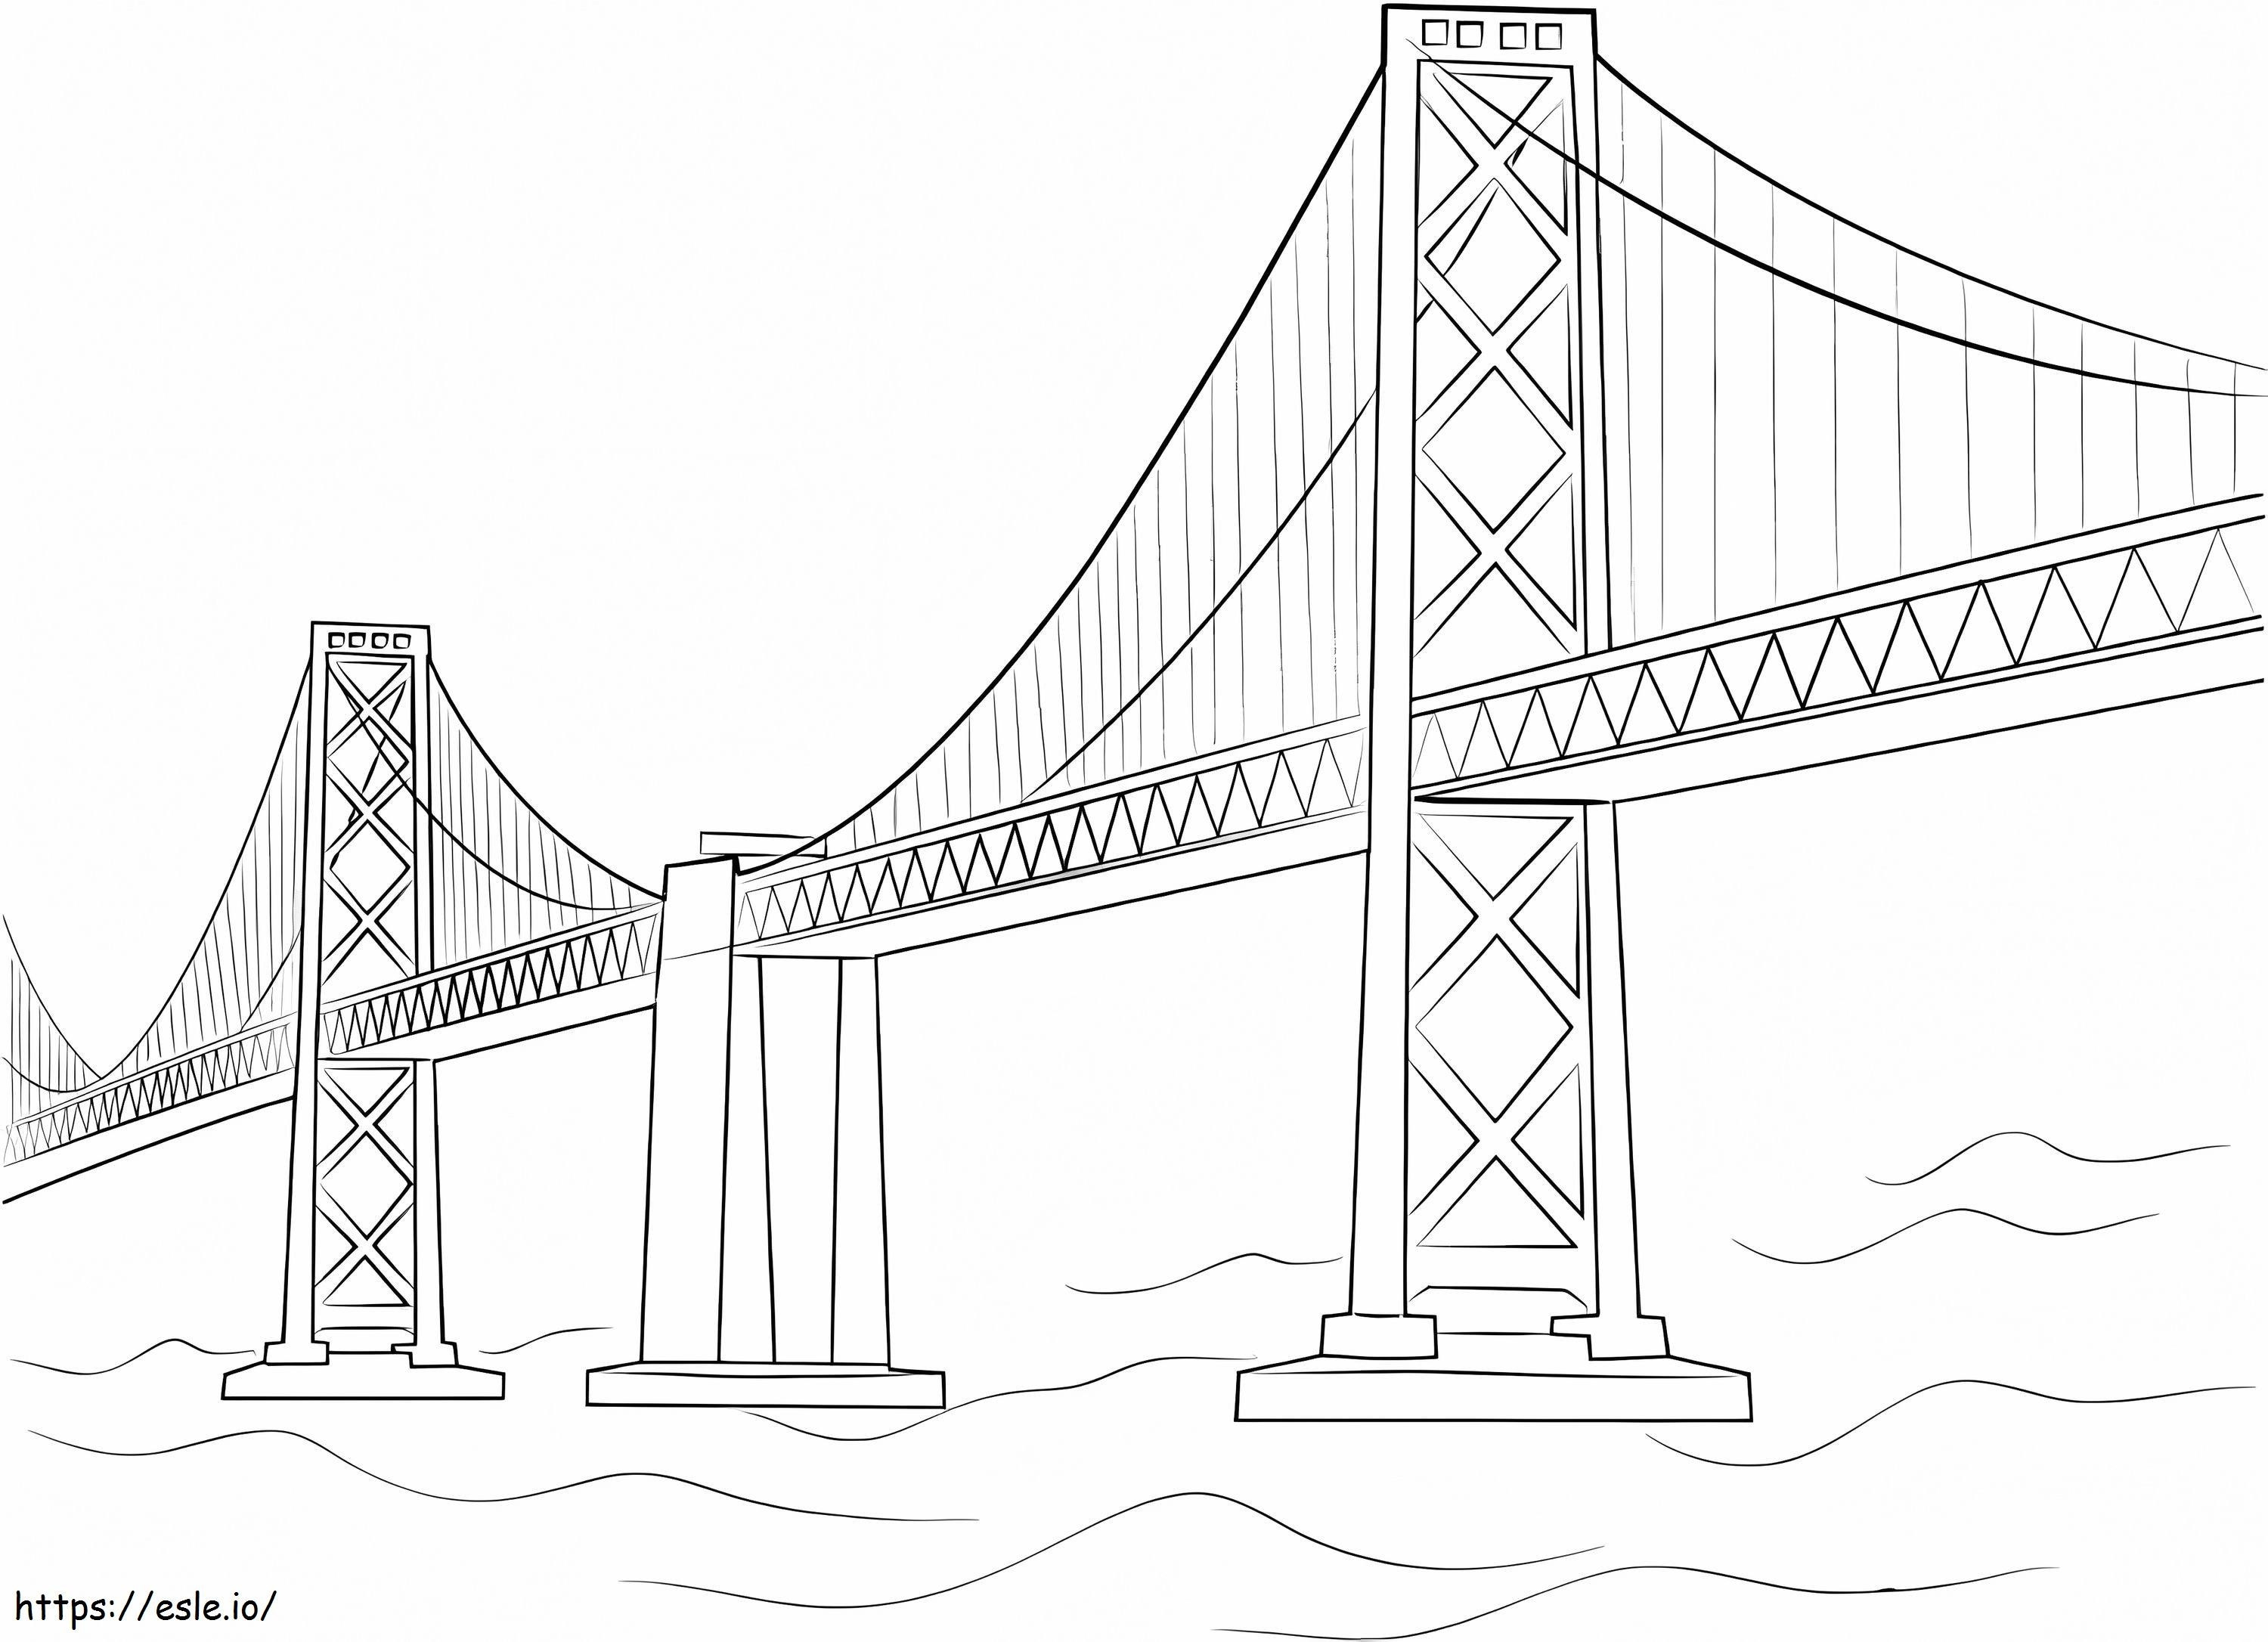 Oakland Bay Bridge kifestő